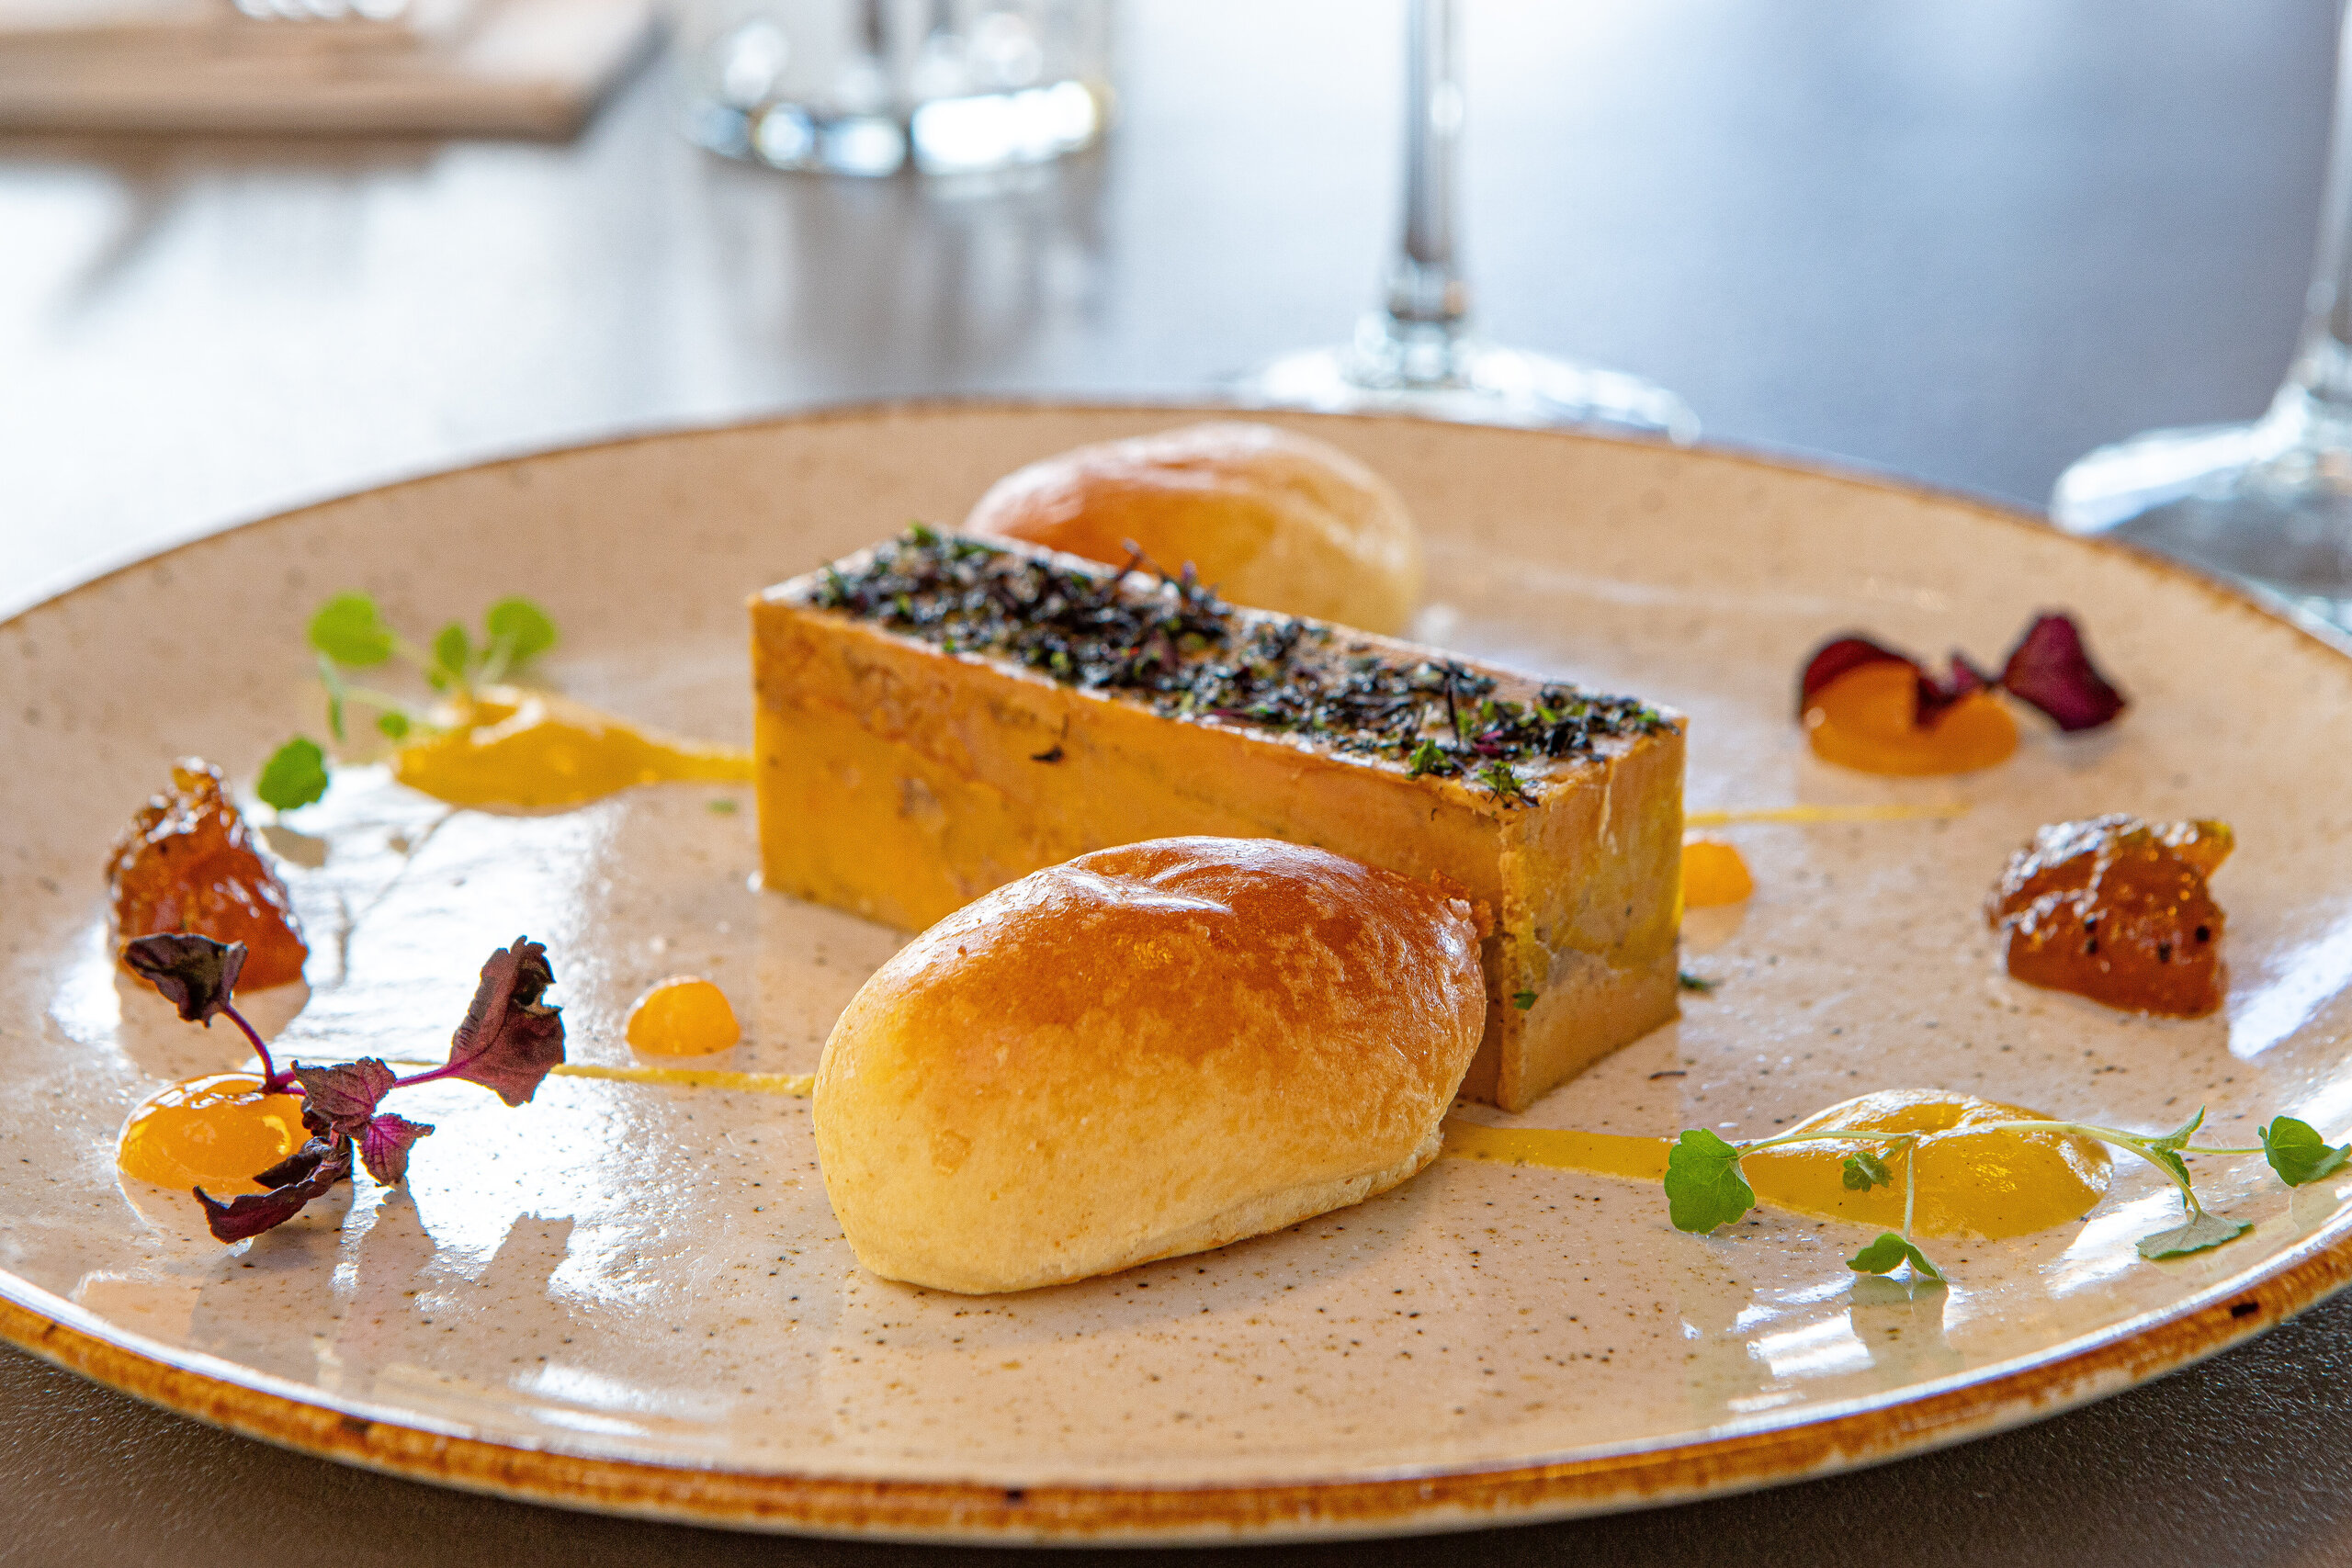 Entrée Foie gras, brioche